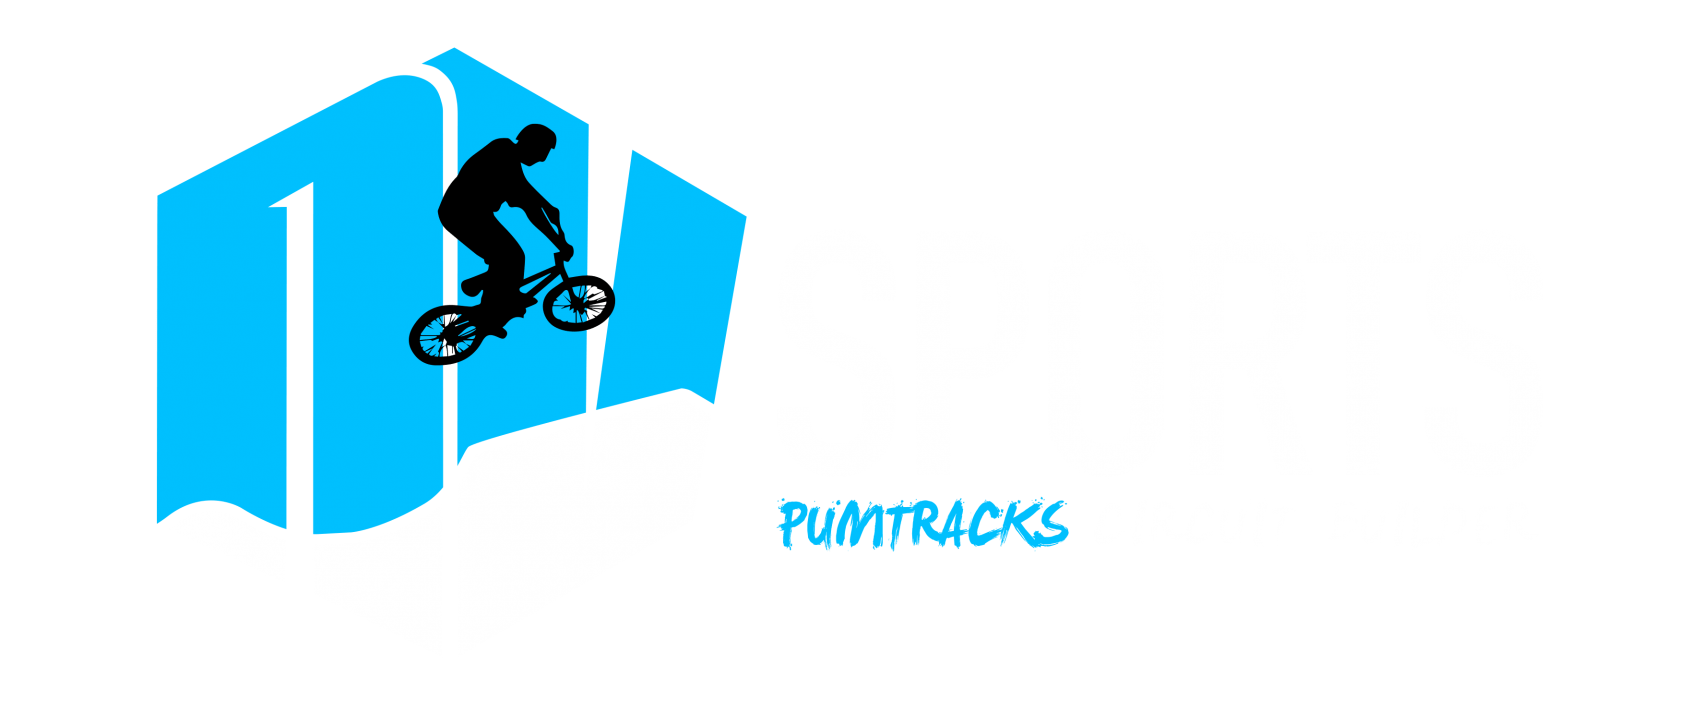 Circuitos Pumptrack NV Sports